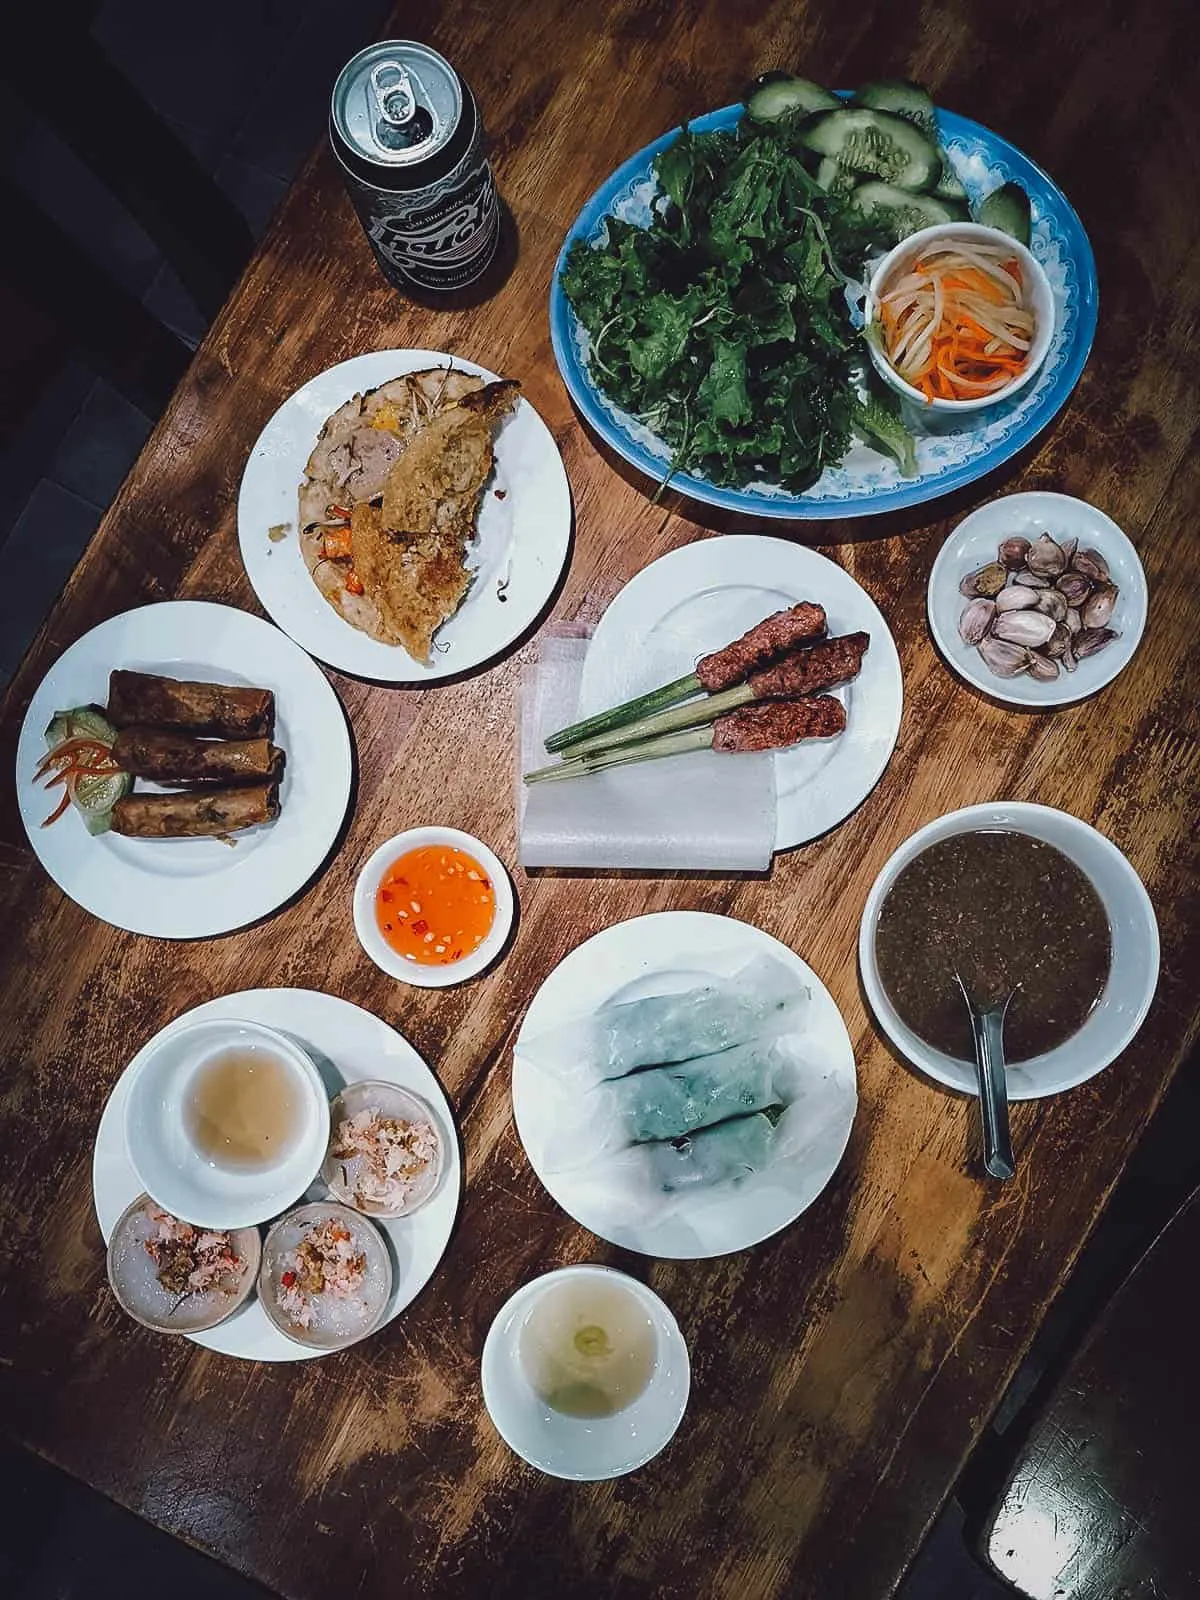 Set menu at Hanh Restaurant in Hue, Vietnam